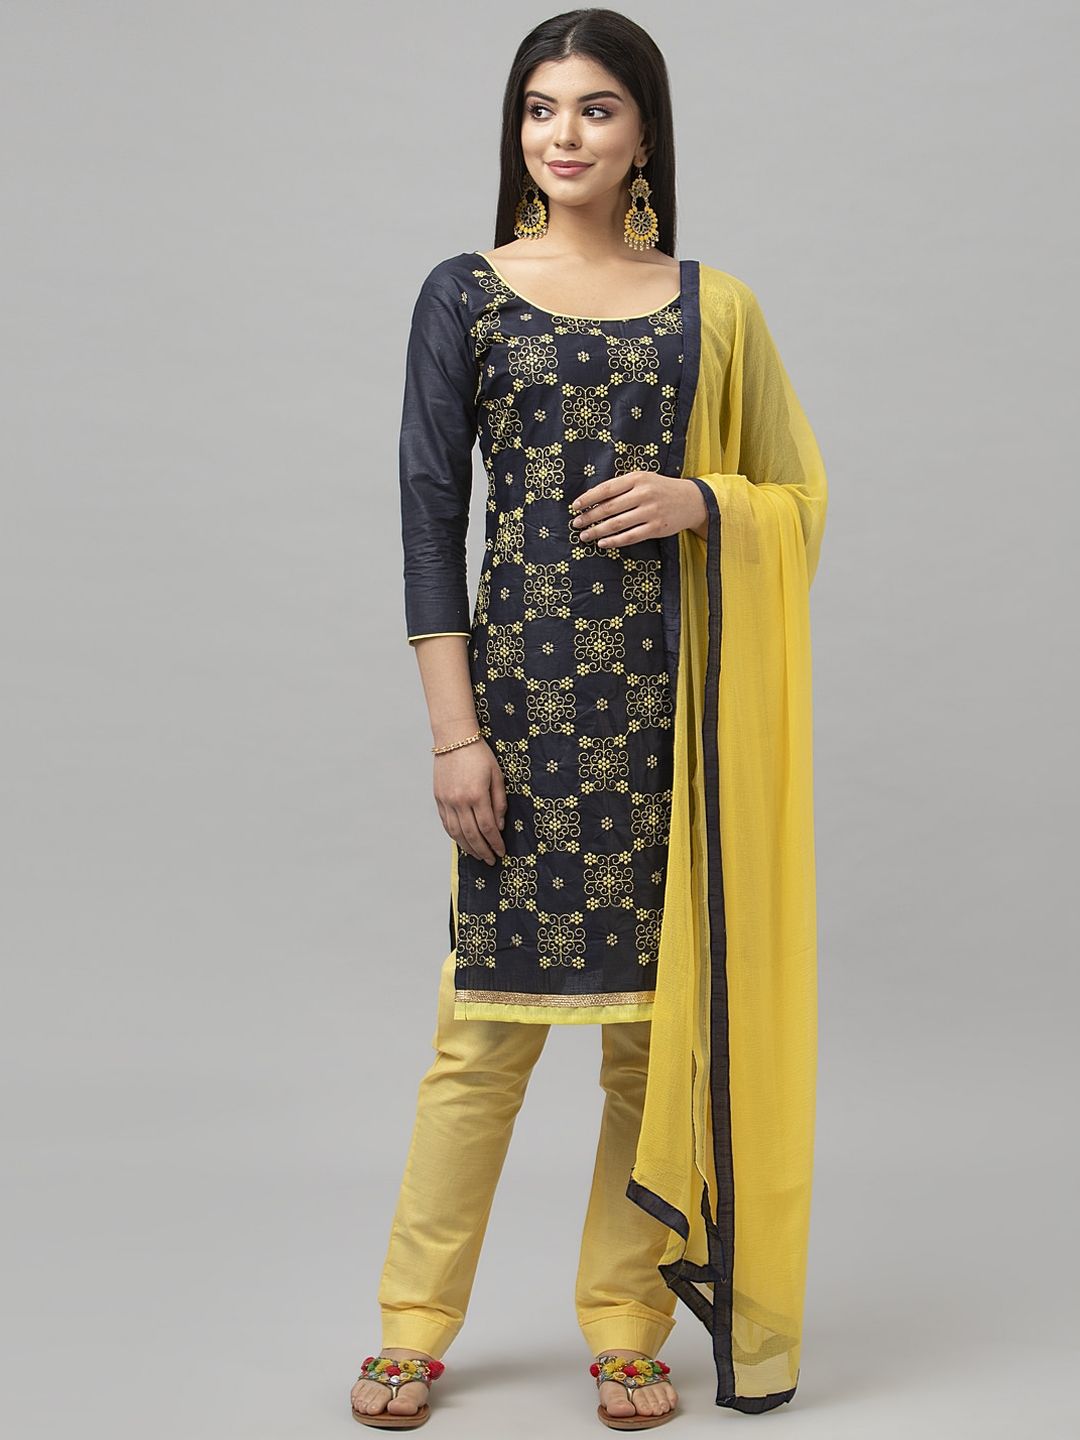 Satrani Yellow & Black Pure Cotton Unstitched Dress Material Price in India